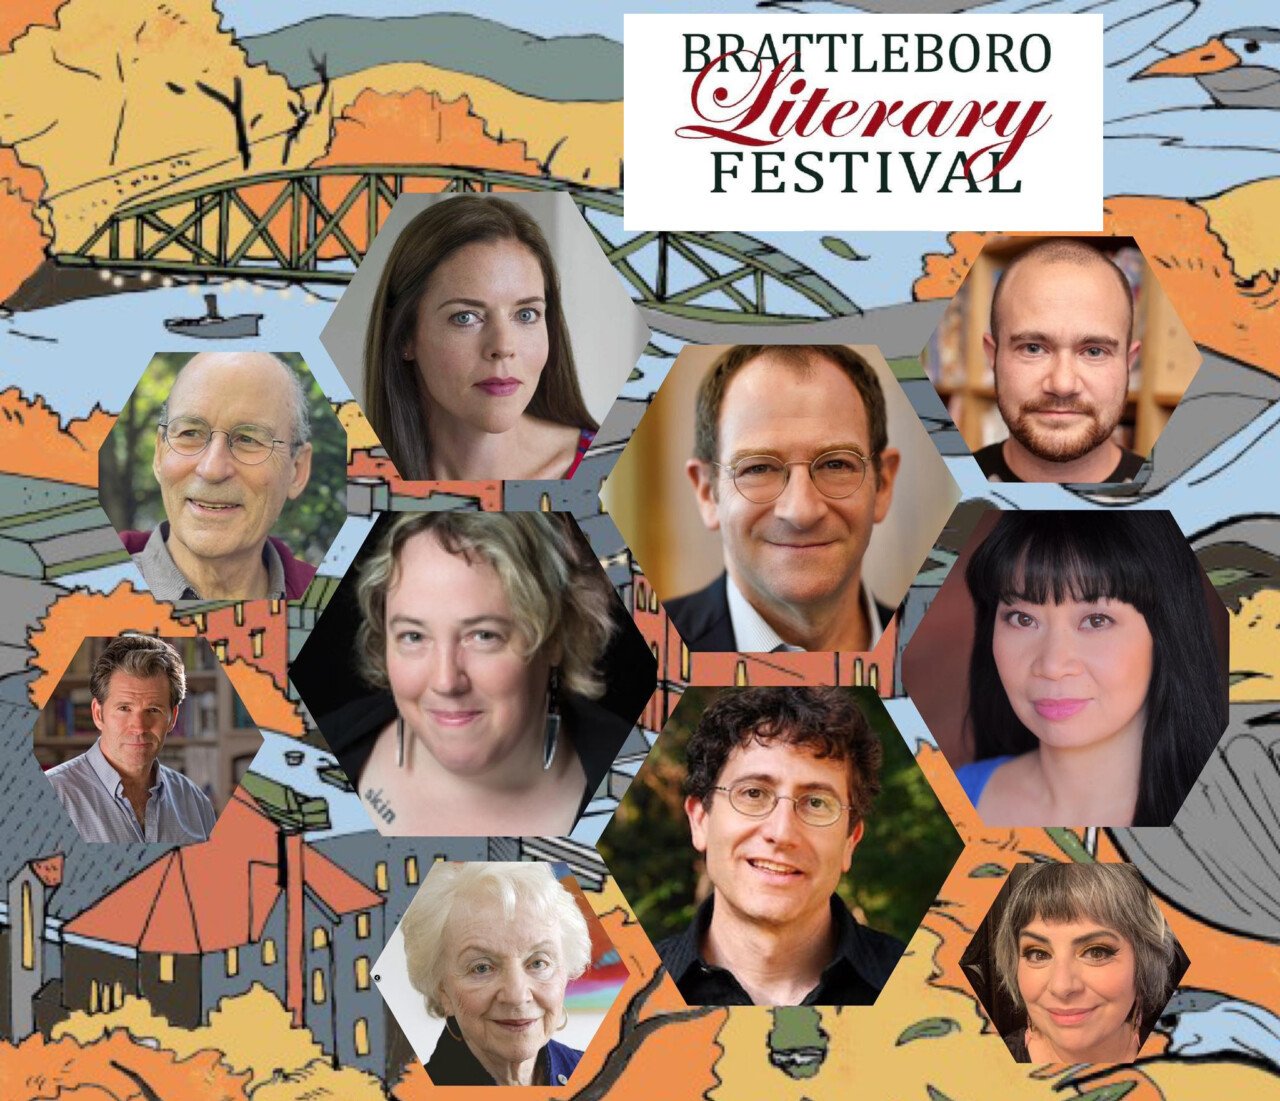 22nd Annual Brattleboro Literary Festival